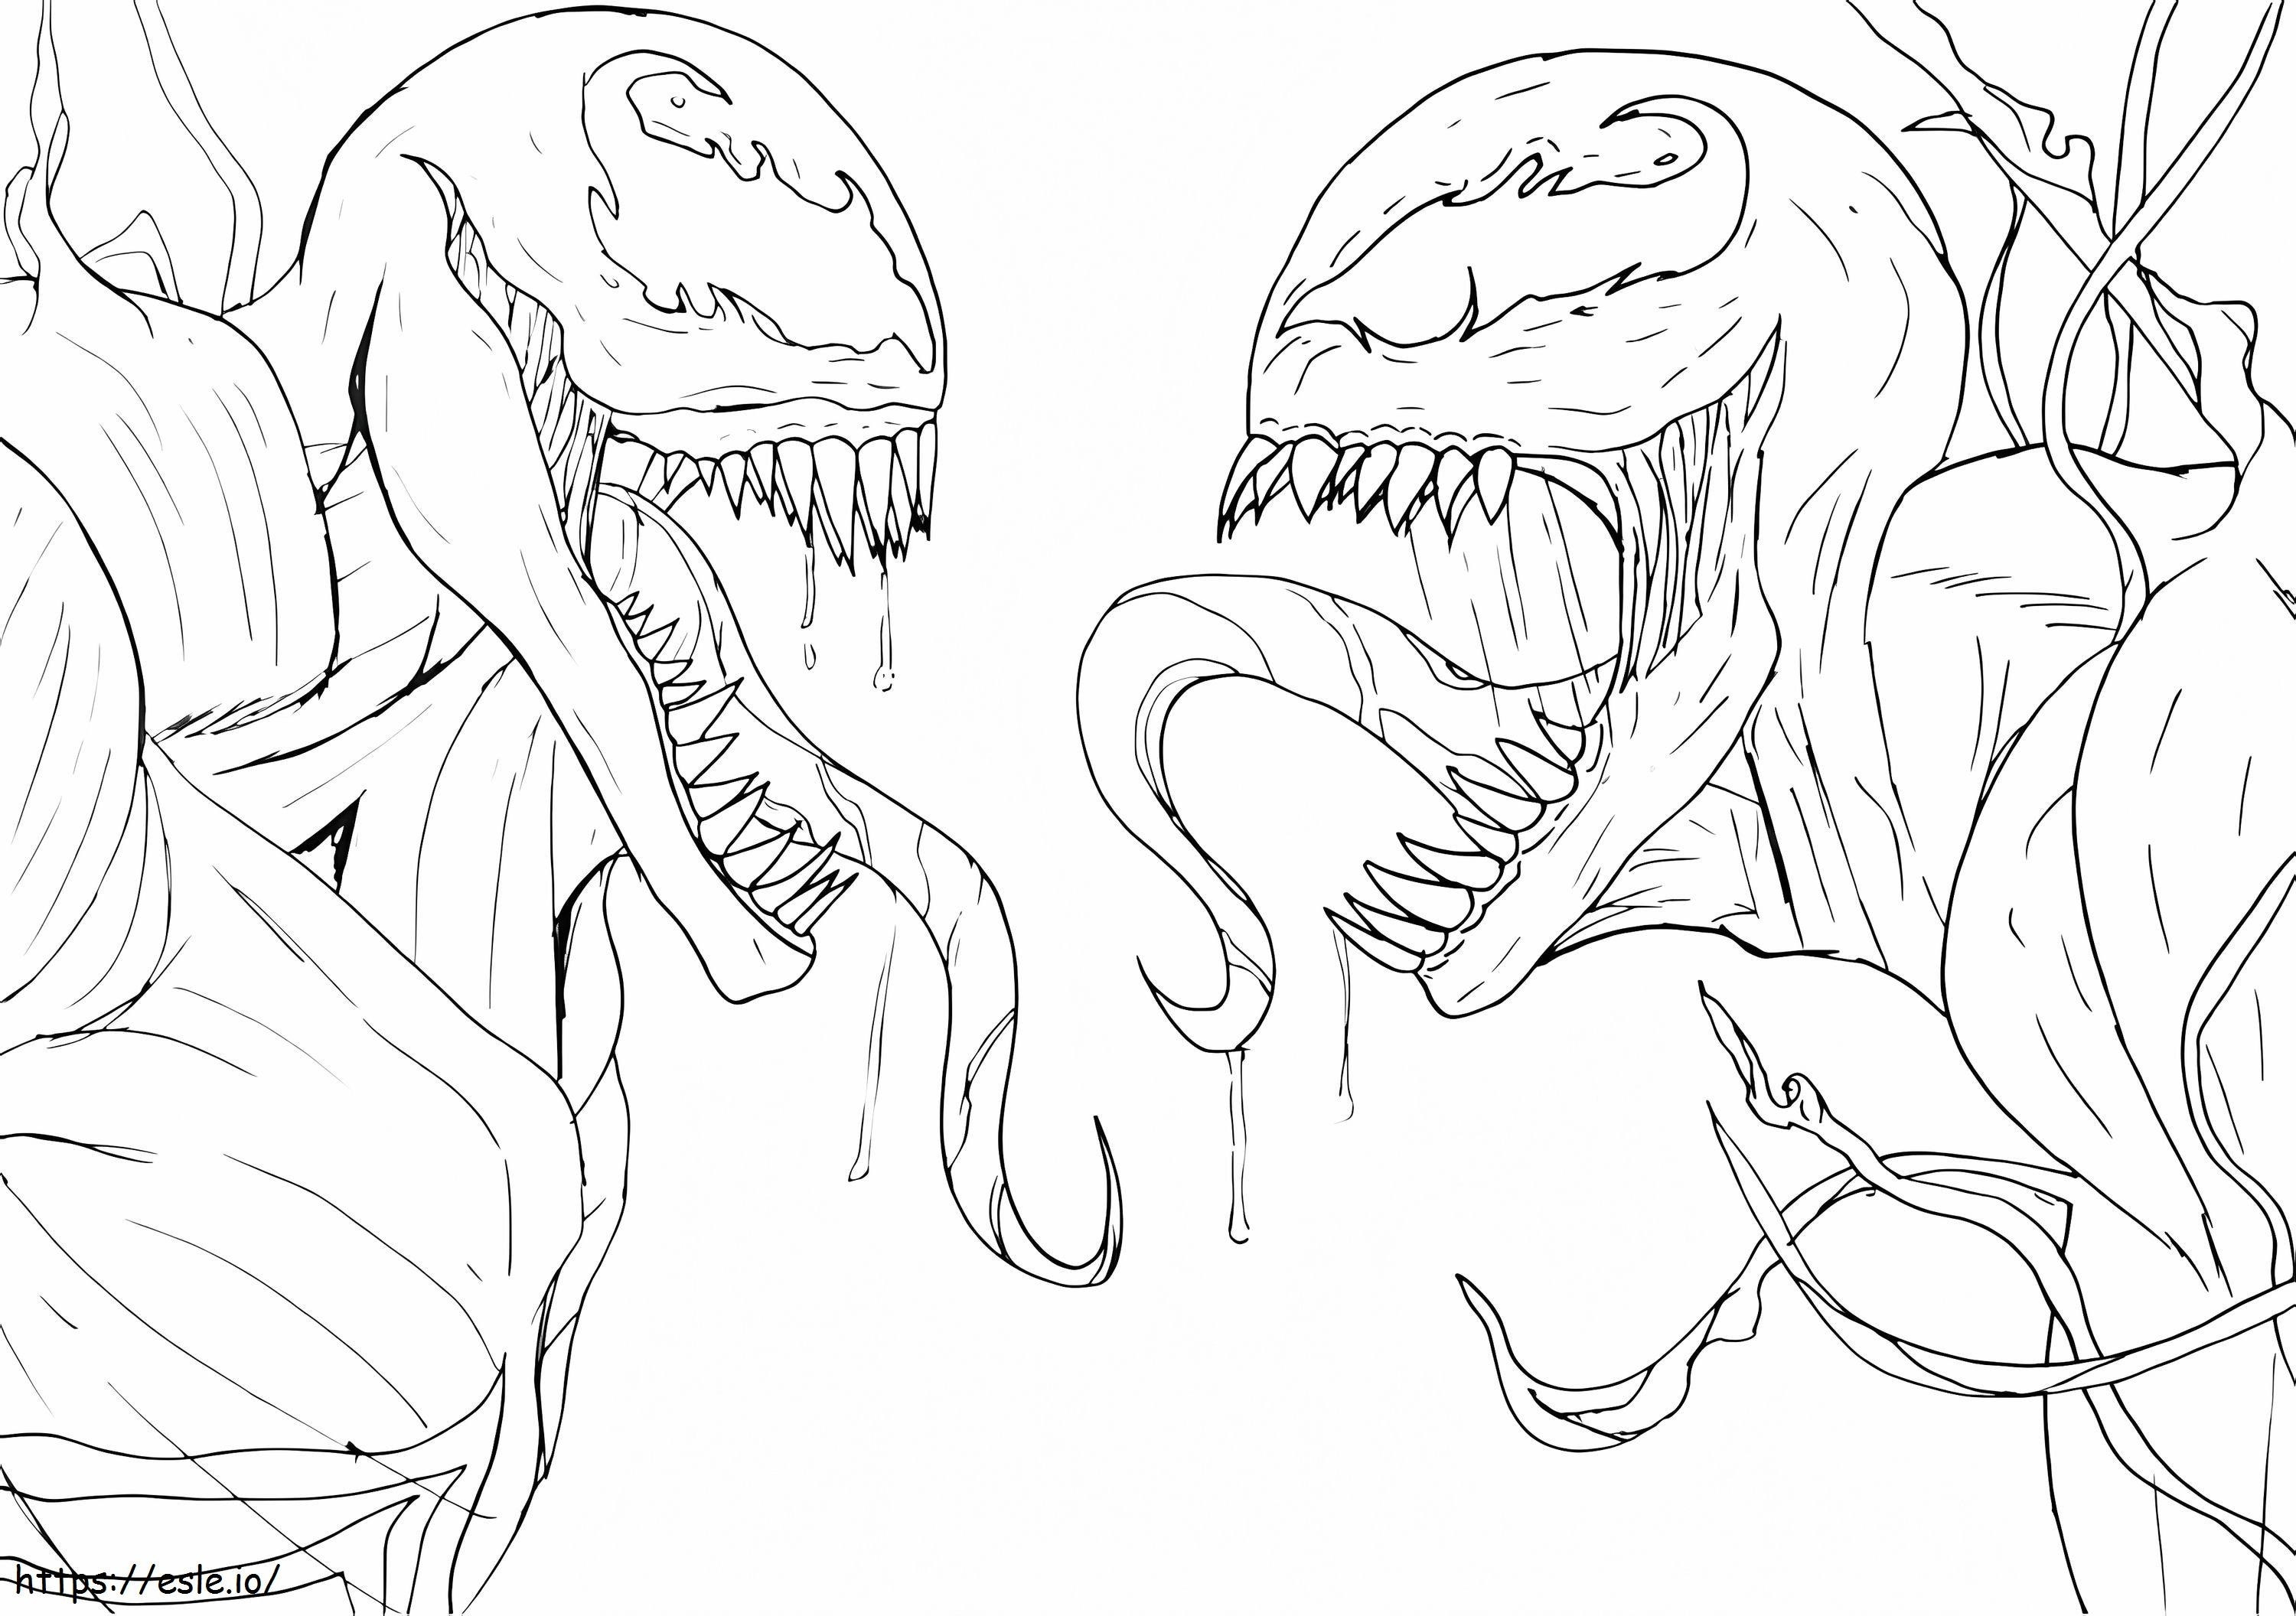 Carnage Vs Venom coloring page